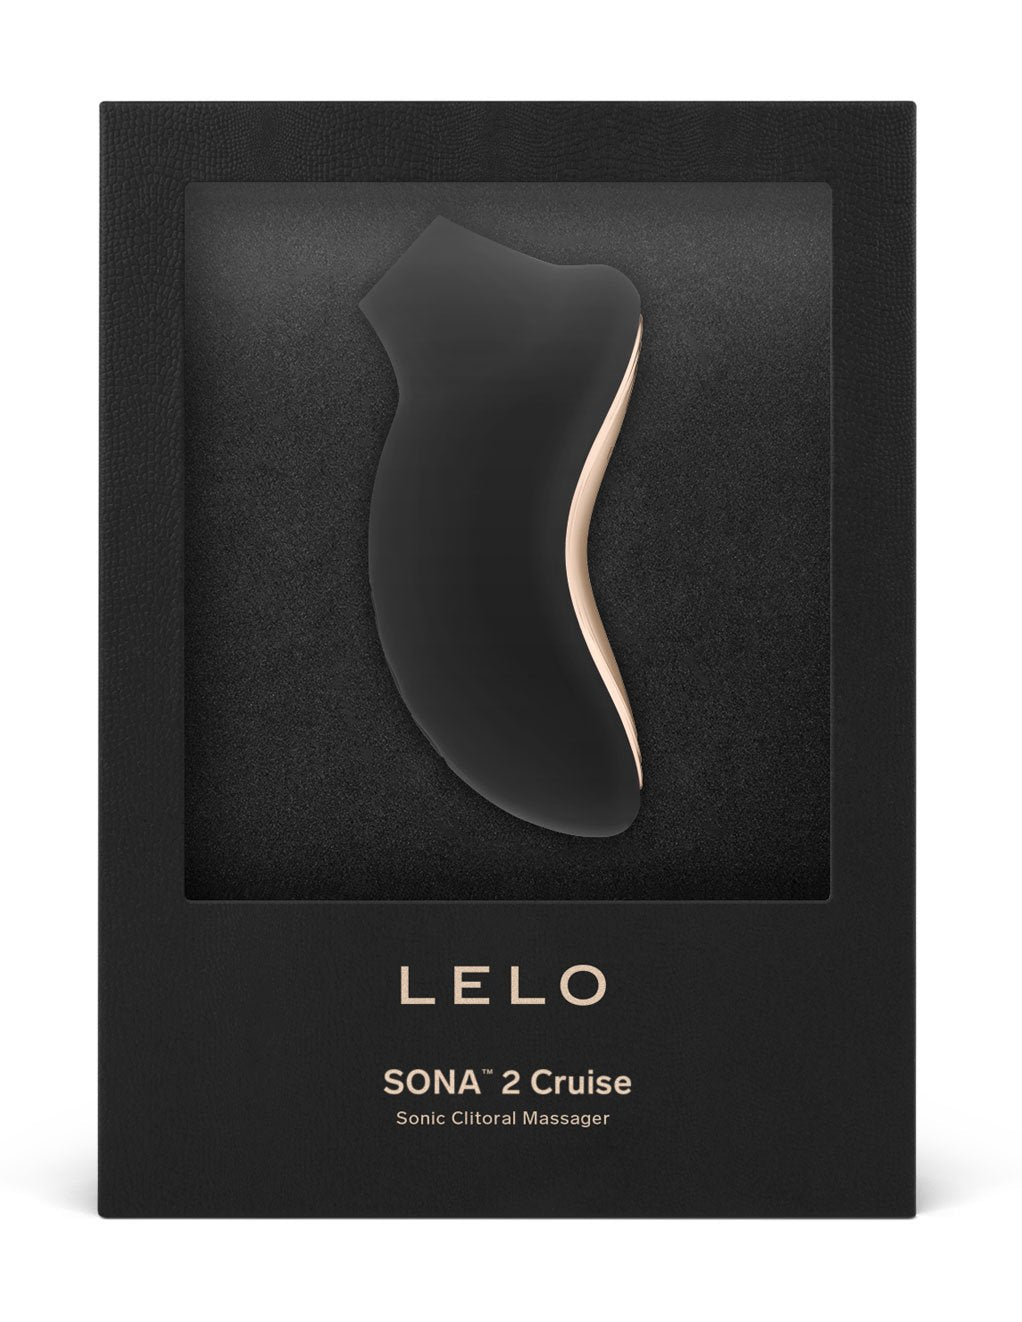 Lelo Sona Cruise 2 Sonic Clitoral Massager- Black- Box